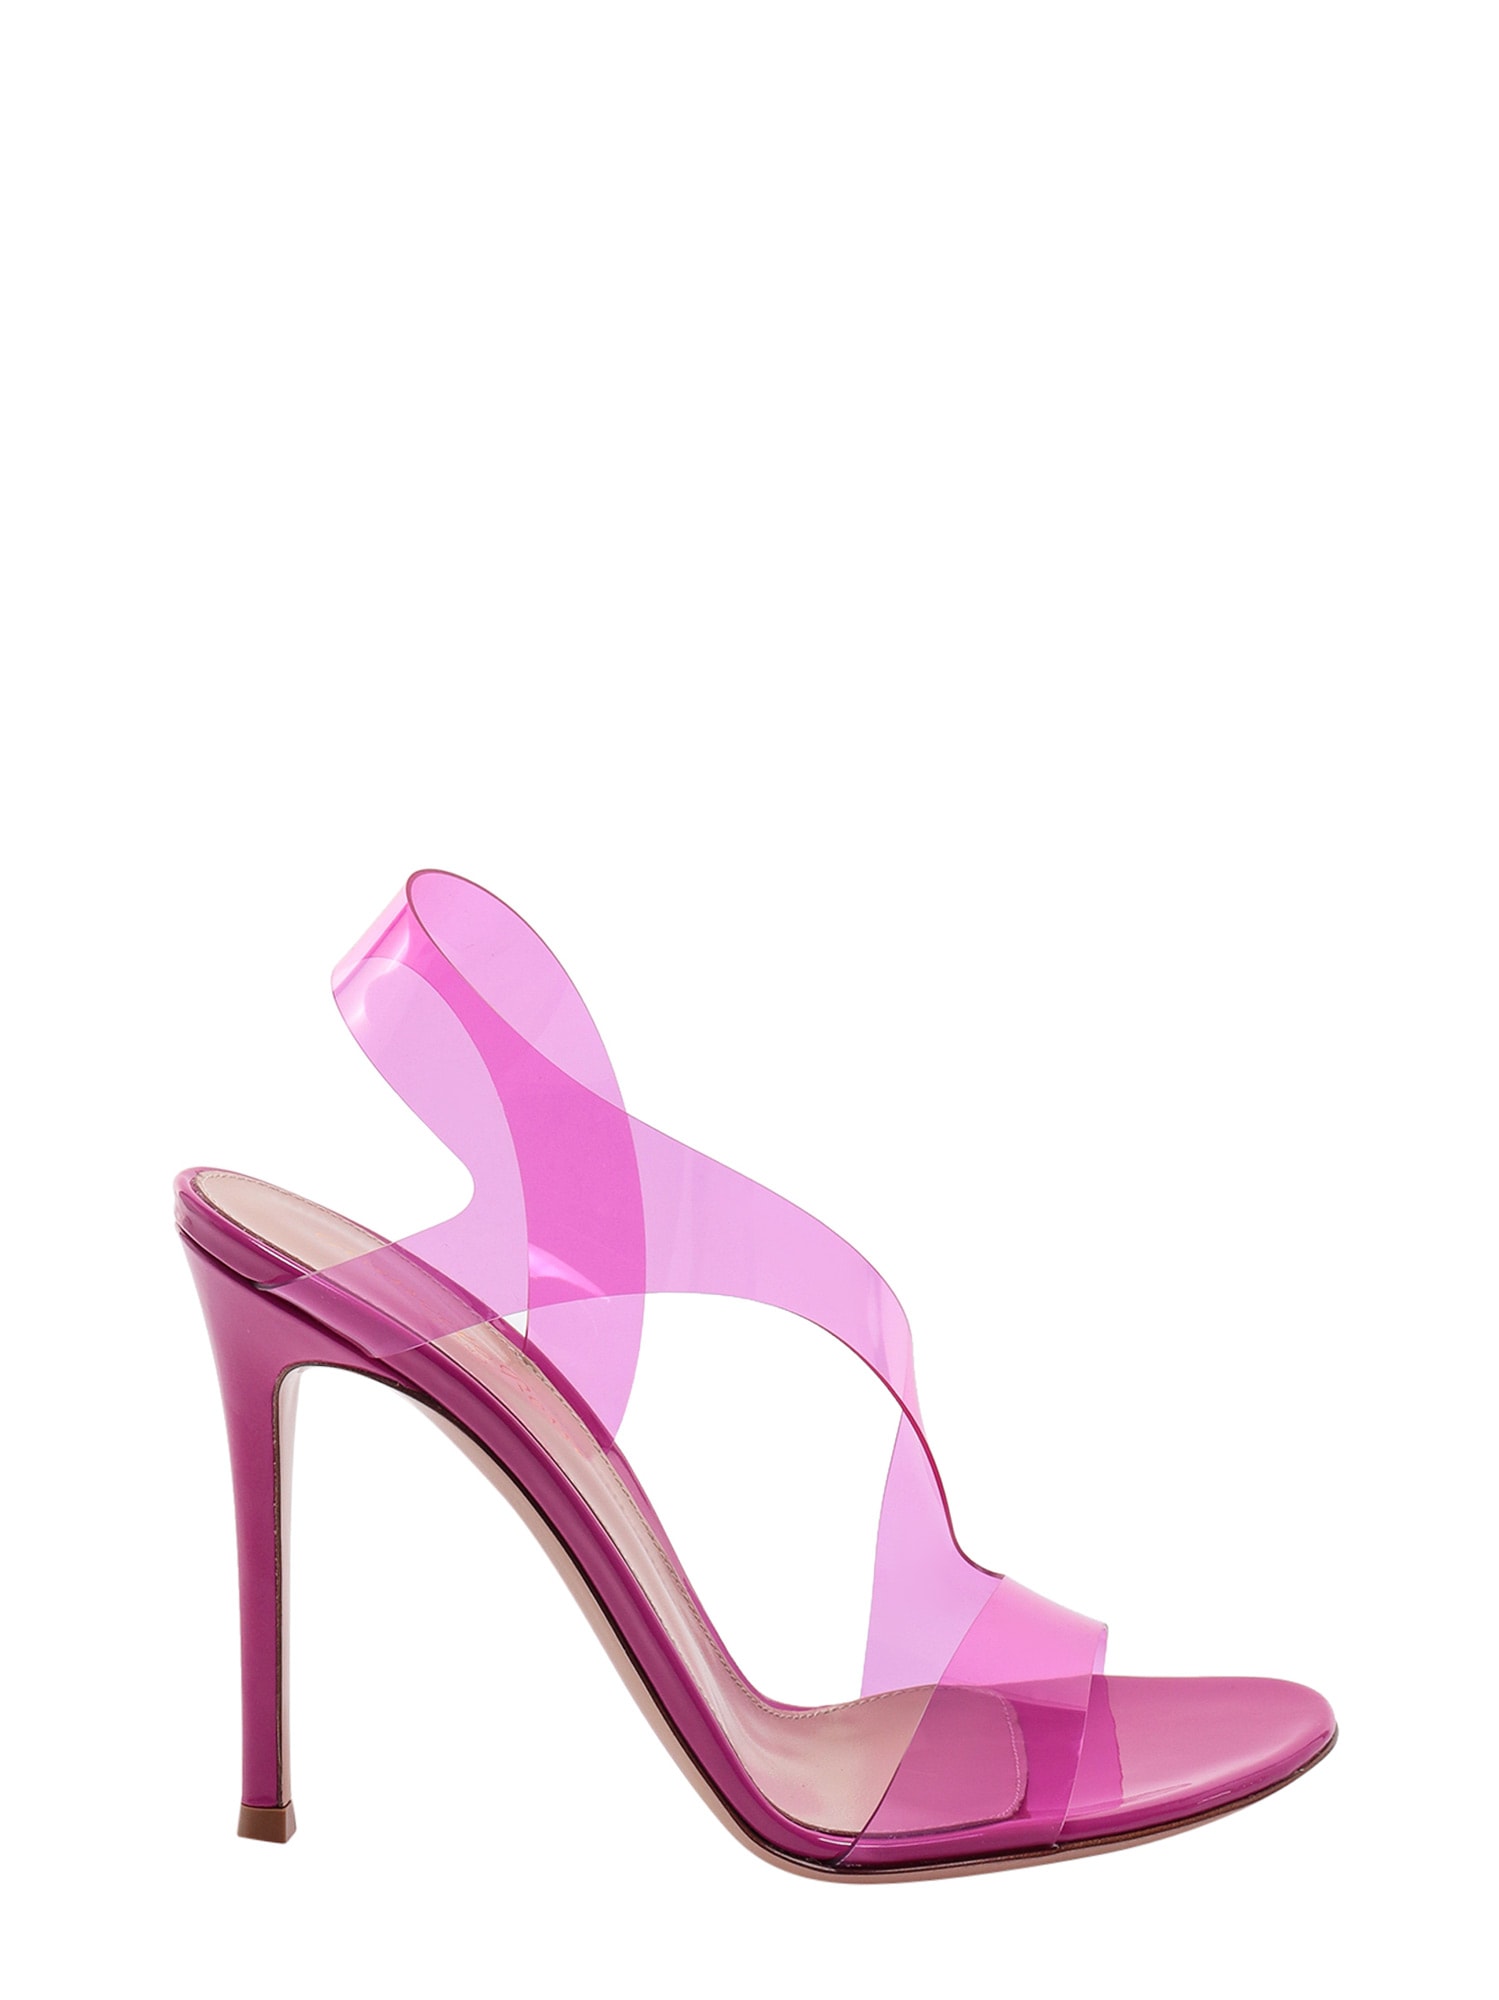 Gianvito Rossi Metropolis Sandals In Pink